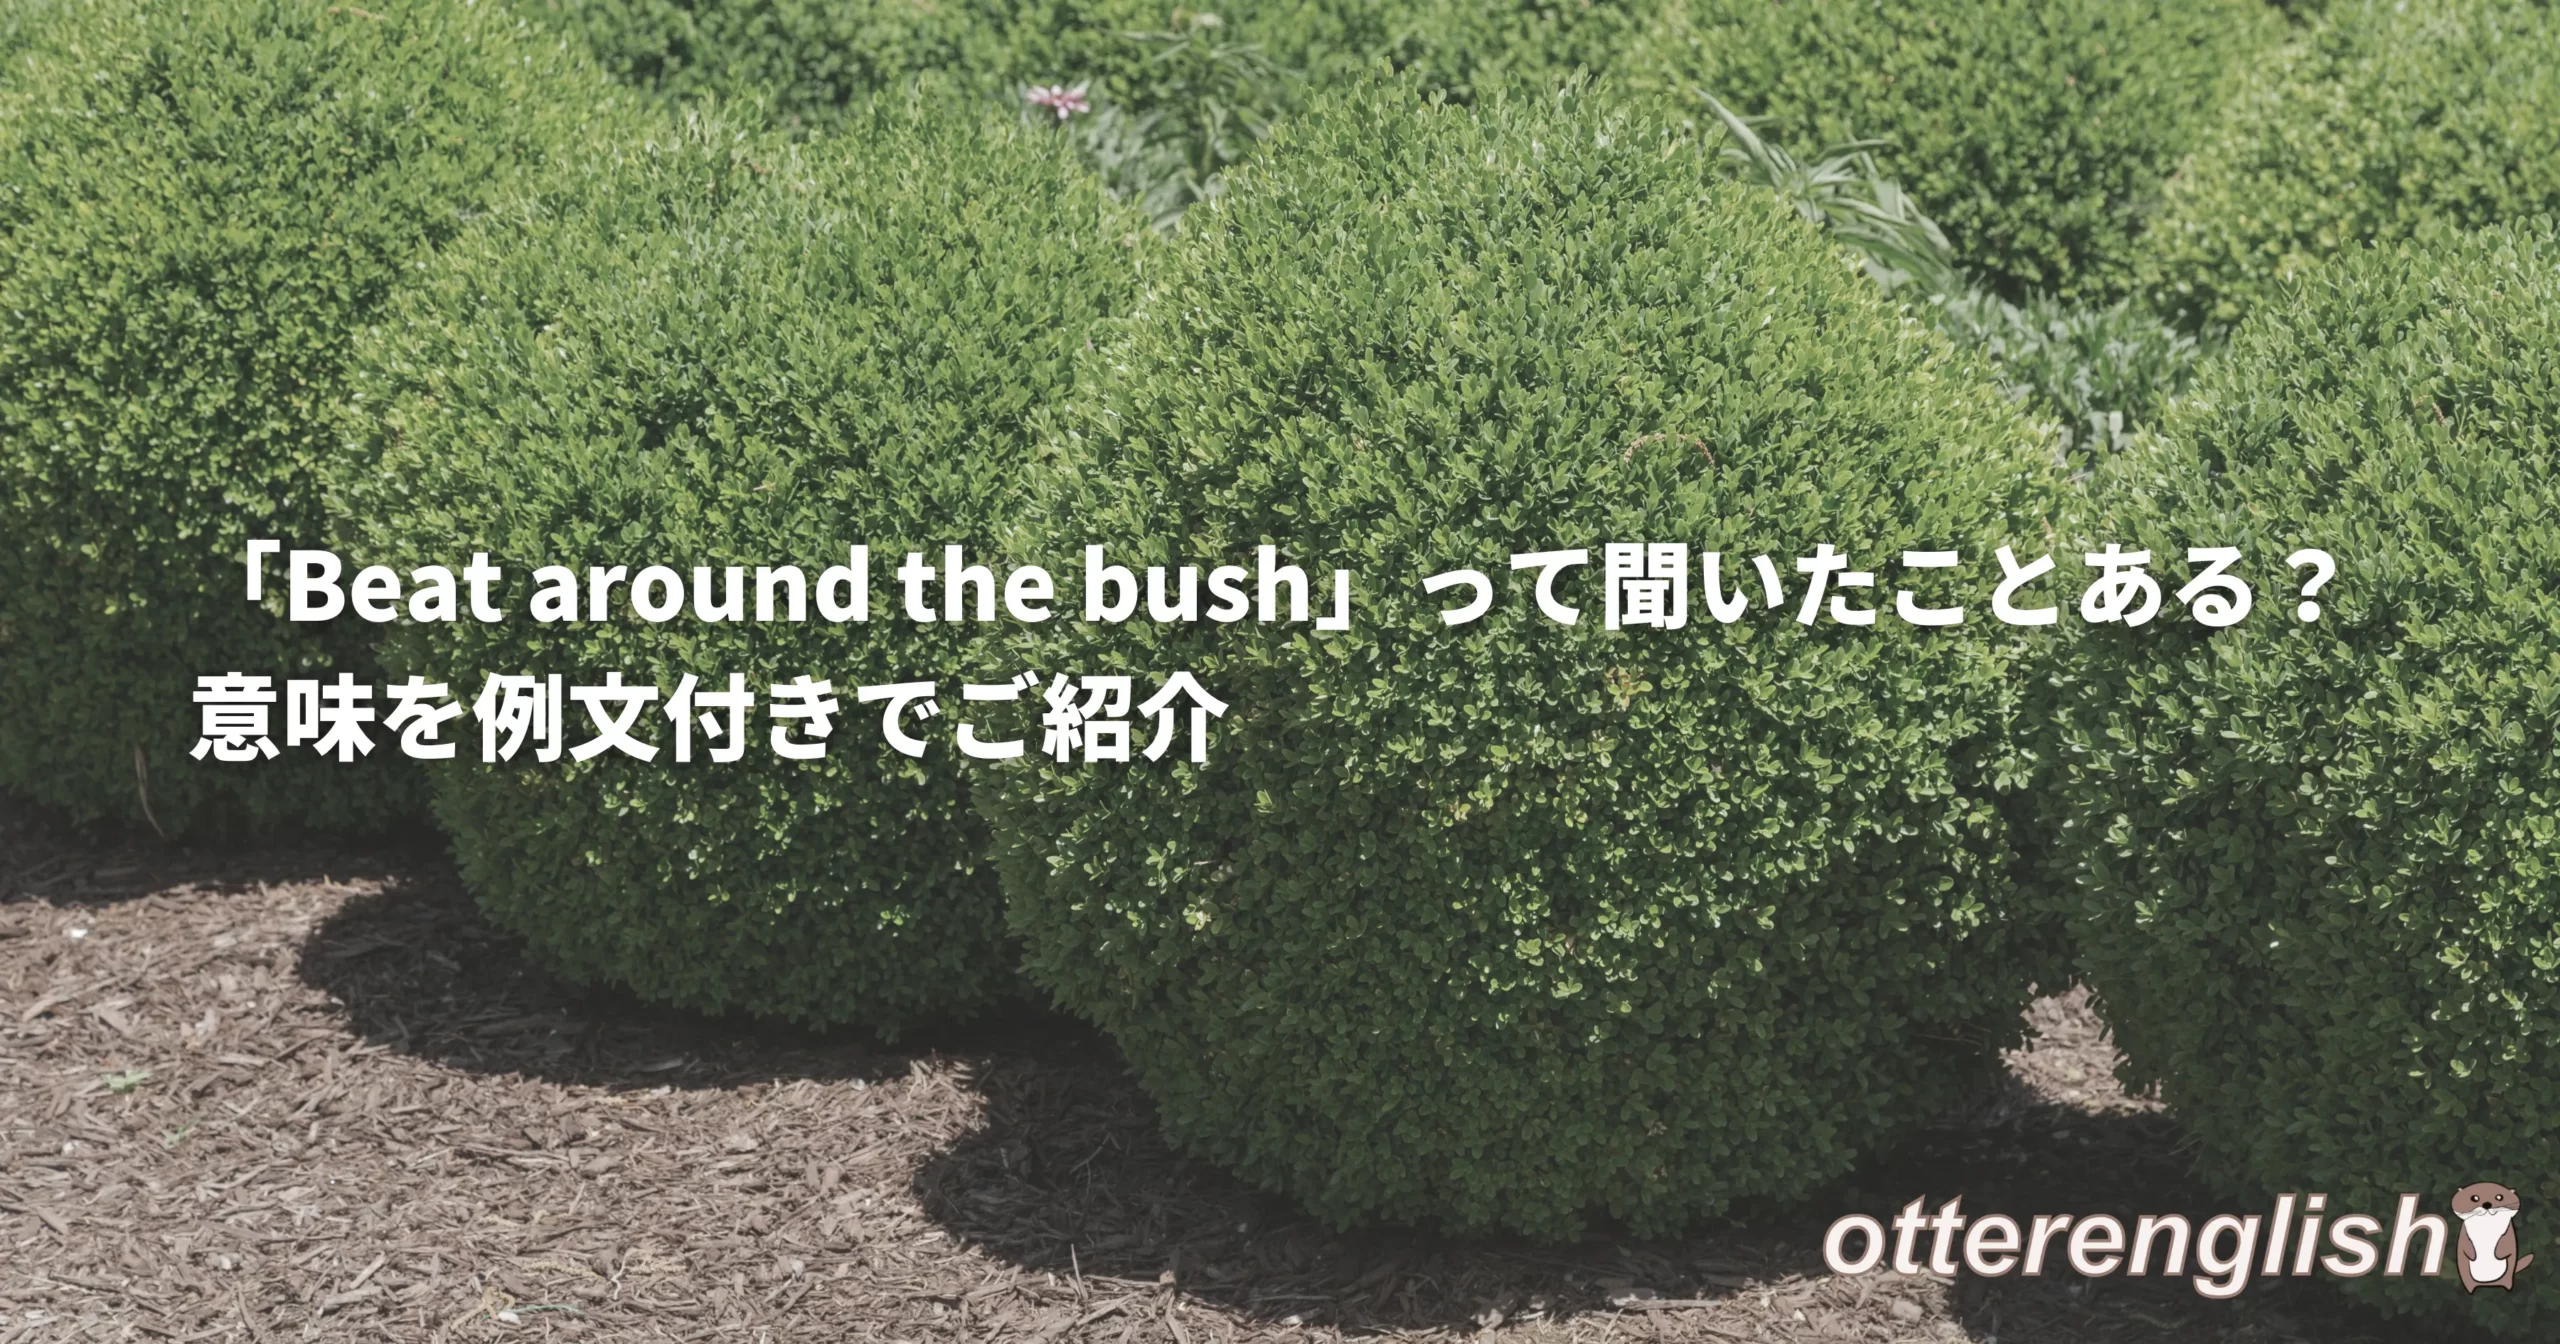 beat around the bushを表した茂みの画像